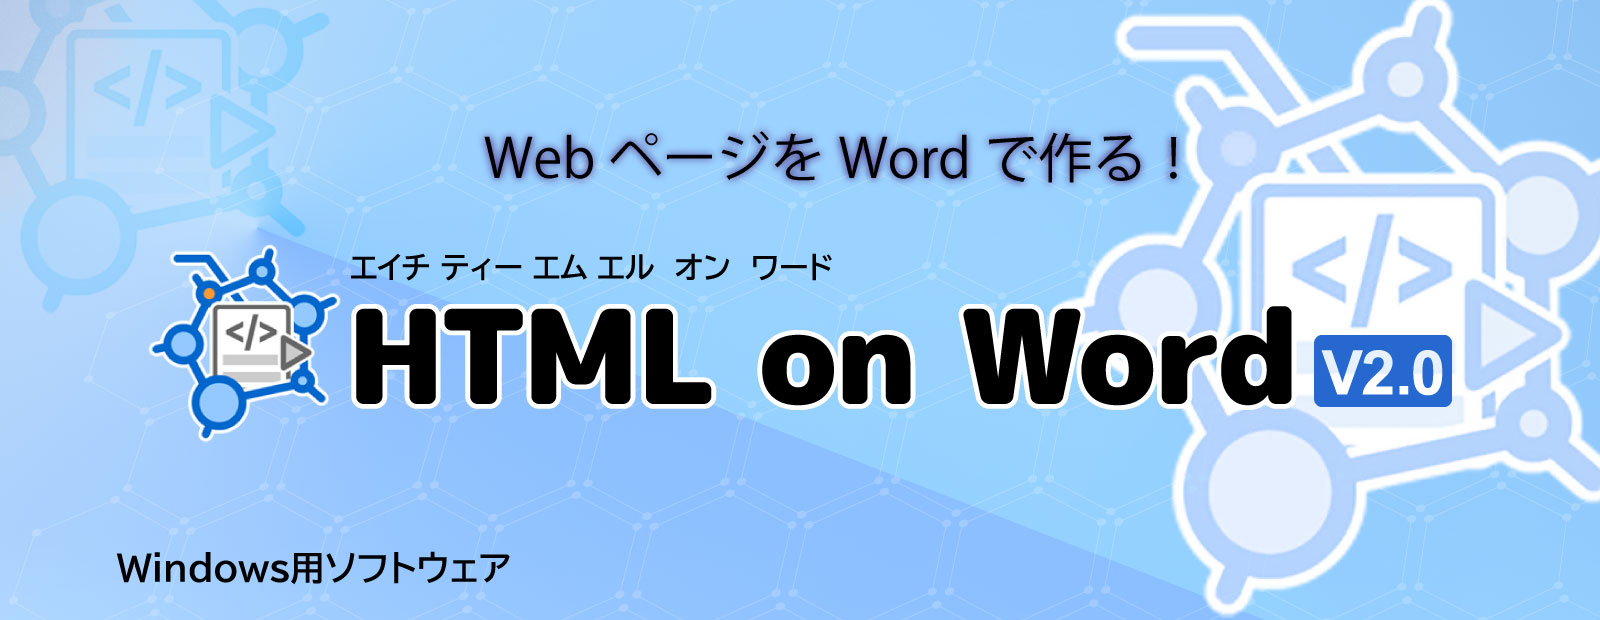 HTML on Word